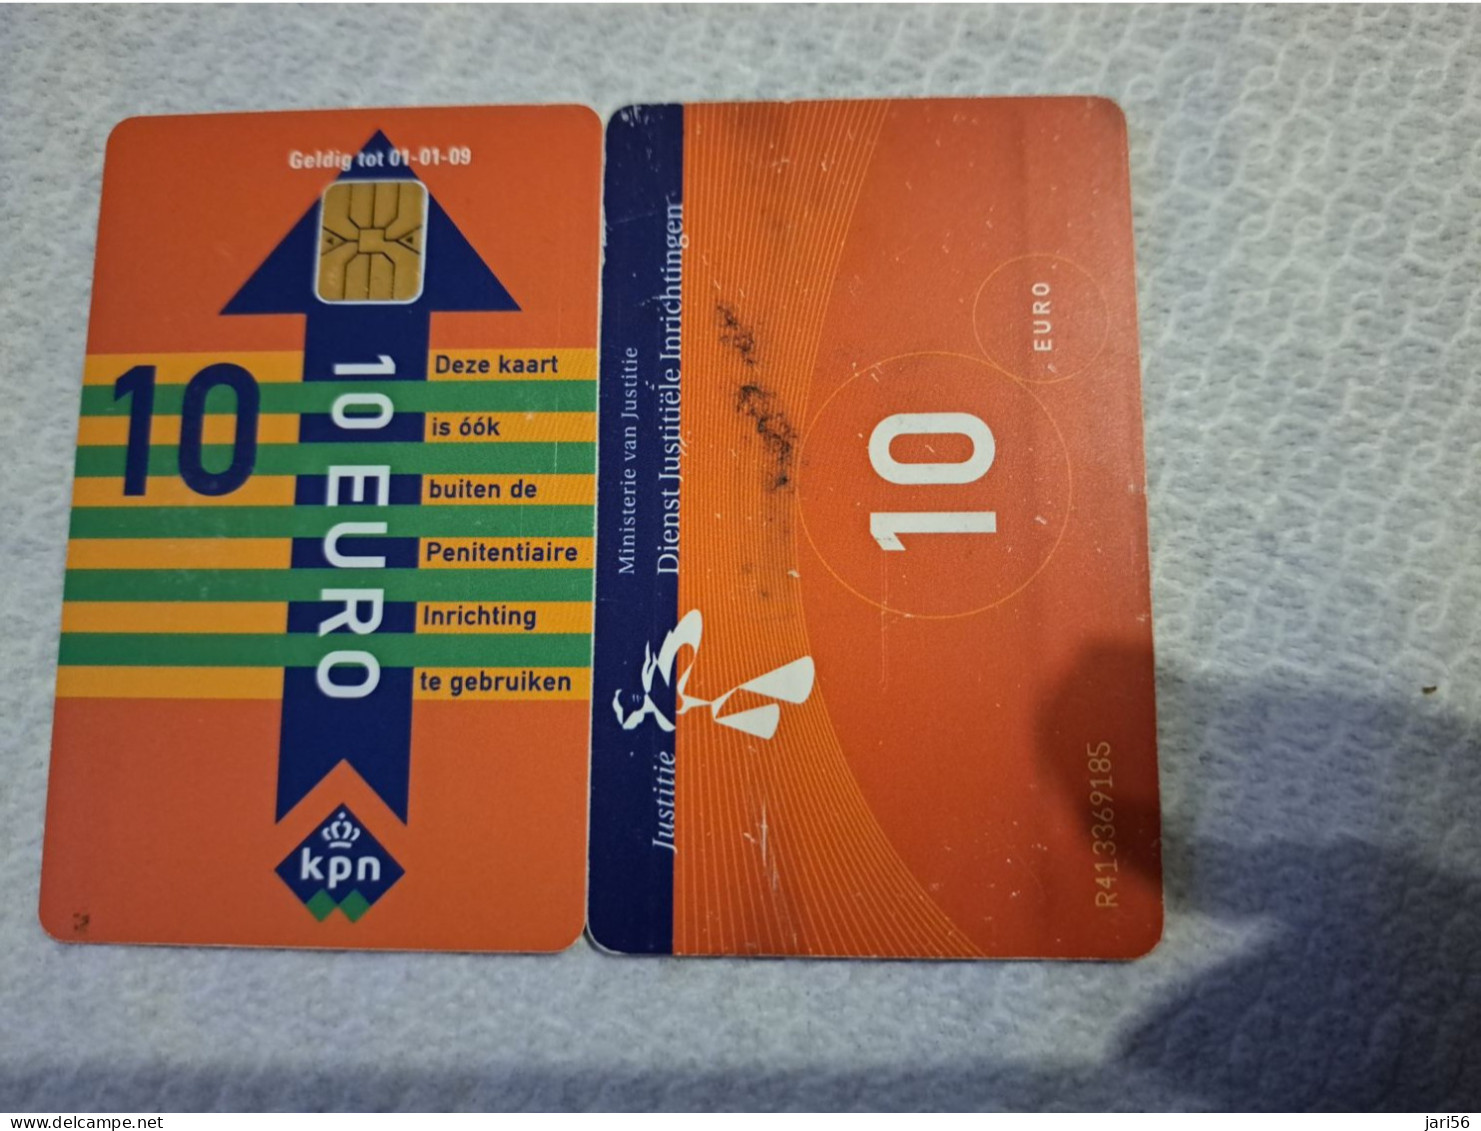 NETHERLANDS   € 10,-   / USED  / DATE  01-01-09  JUSTITIE/PRISON CARD  CHIP CARD/ USED   ** 16162** - [3] Tarjetas Móvil, Prepagadas Y Recargos